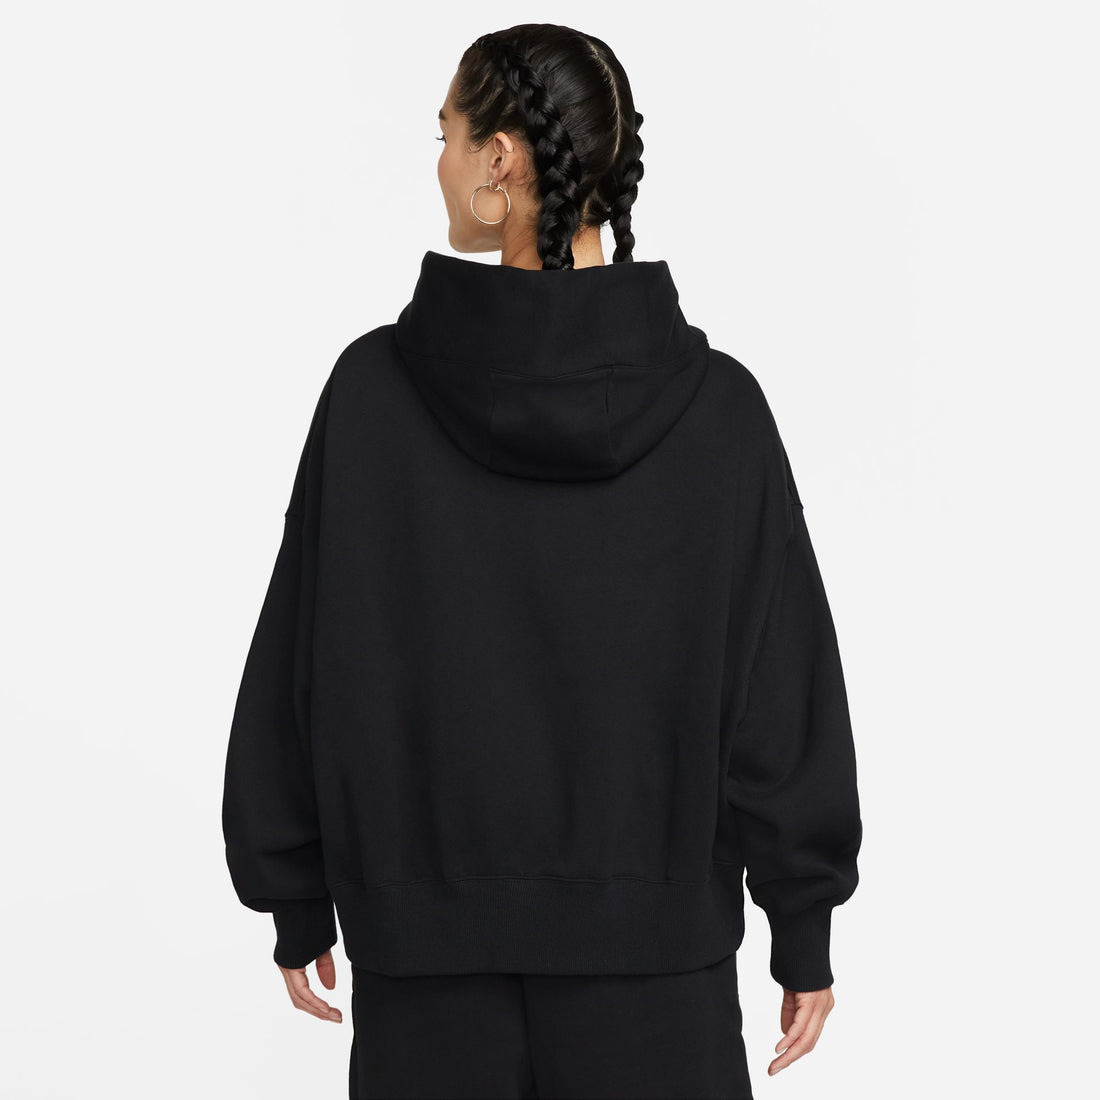 WMNS Nike Phoenix Fleece Over-Oversized Pullover Hoodie (Black/Sail)